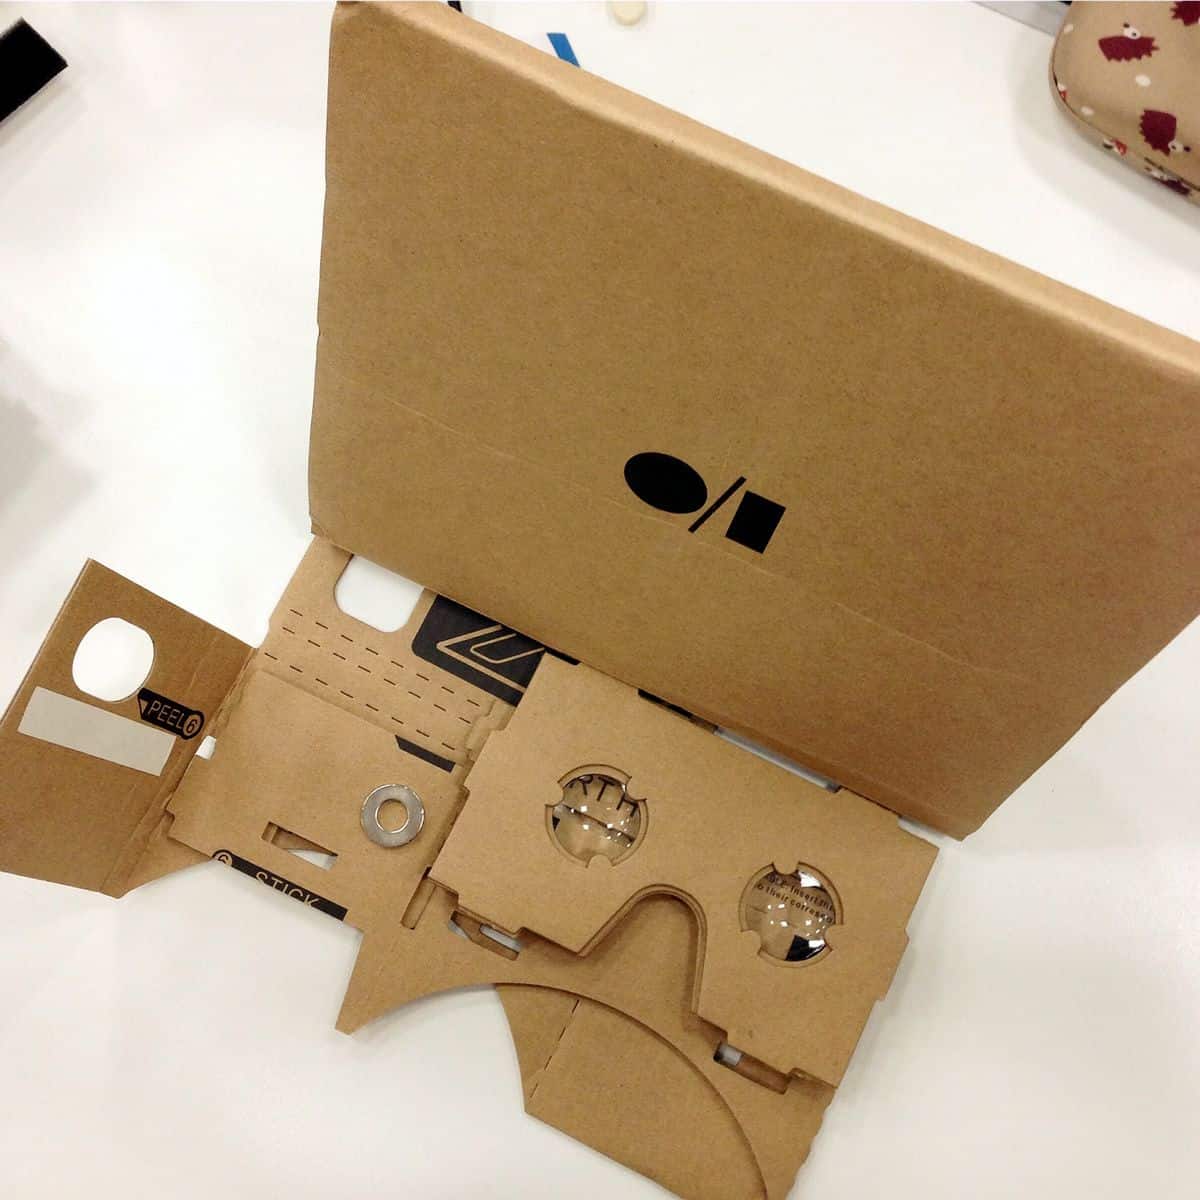 A foldable cardboard virtual reality headset.